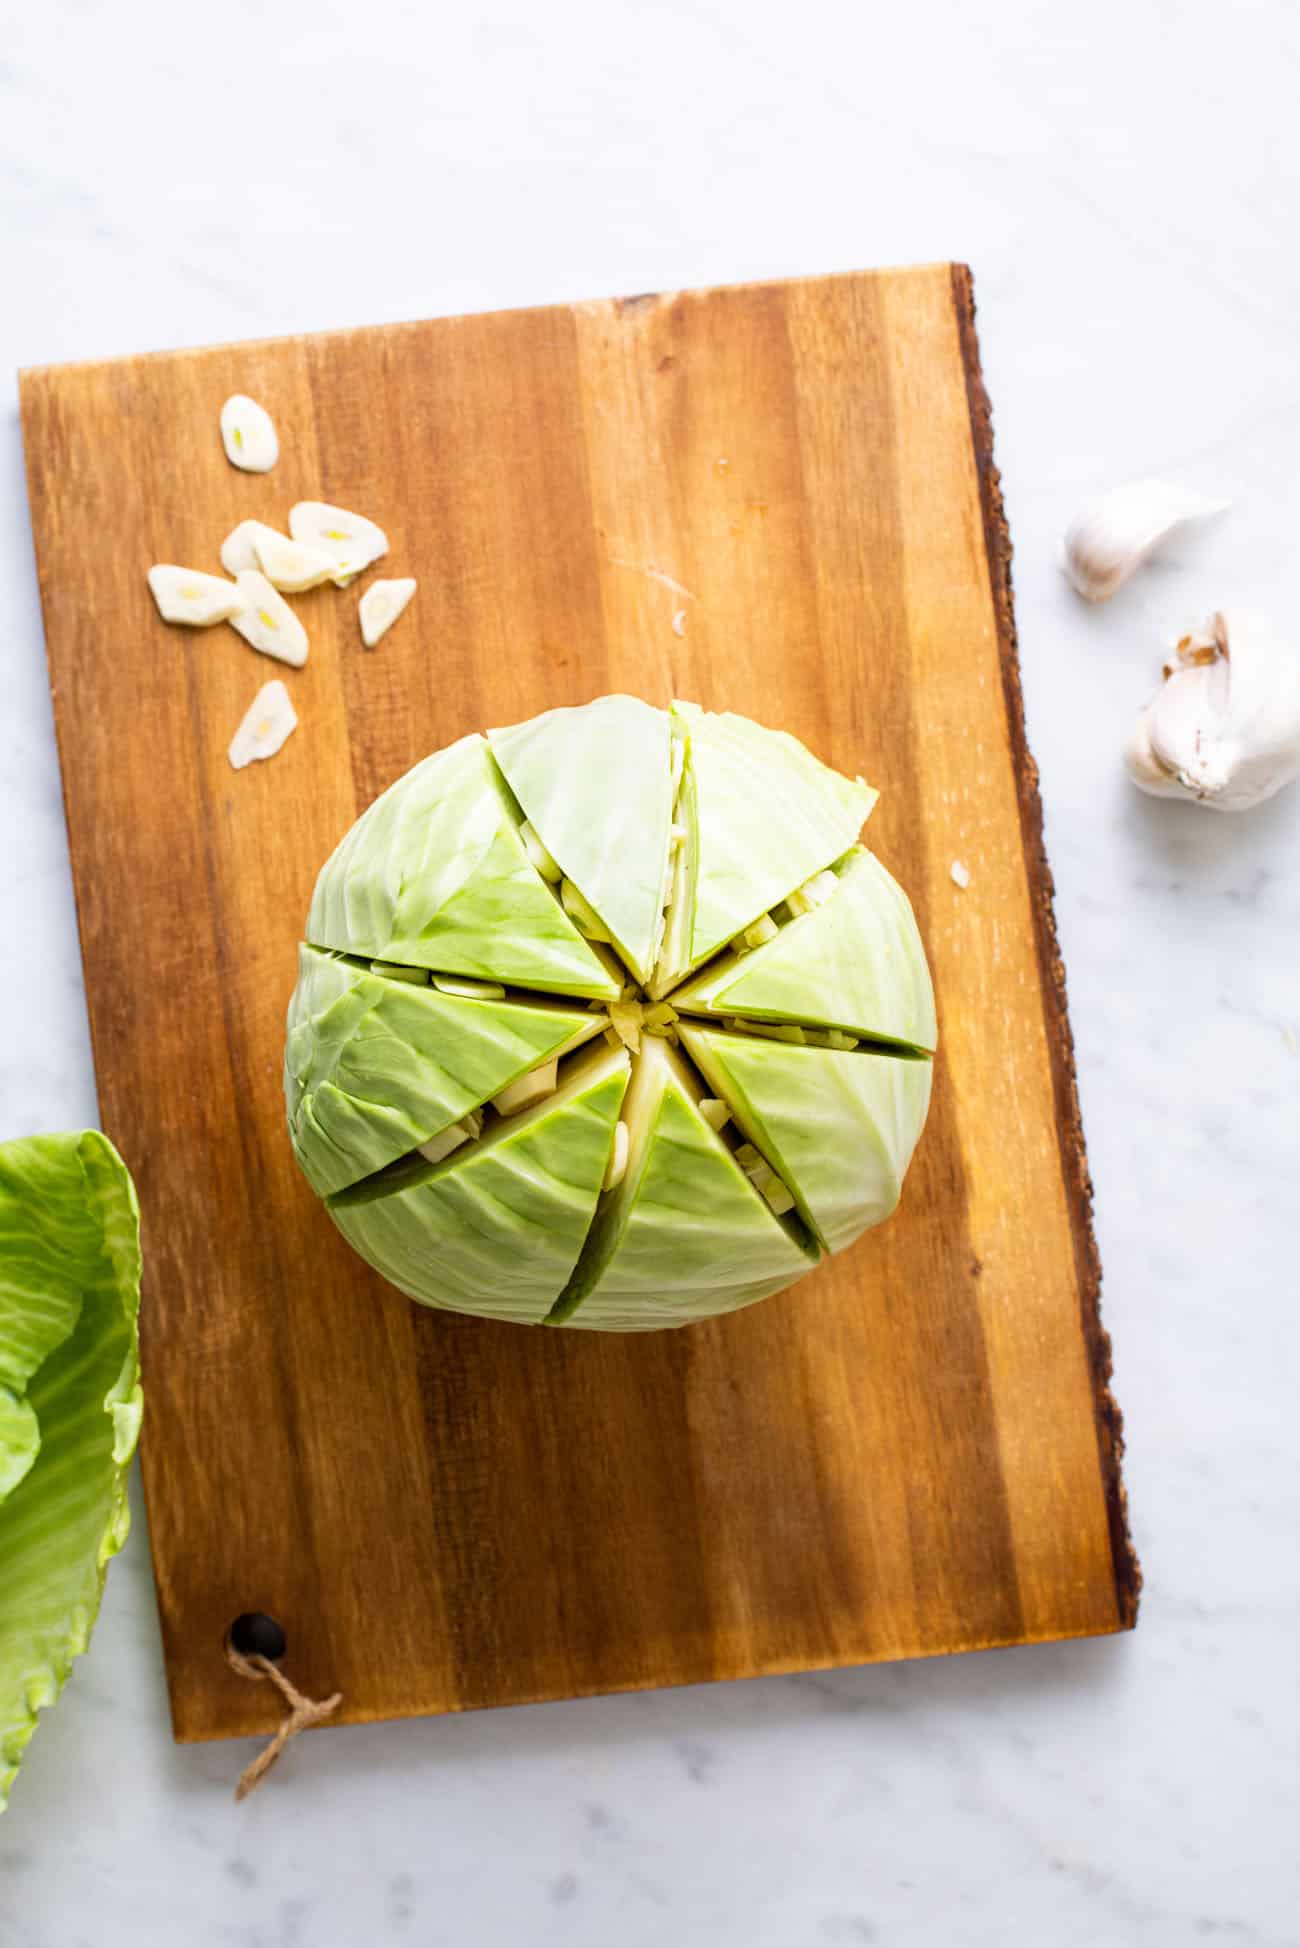 A scored raw cabbage on a cutting board with sliced garlic